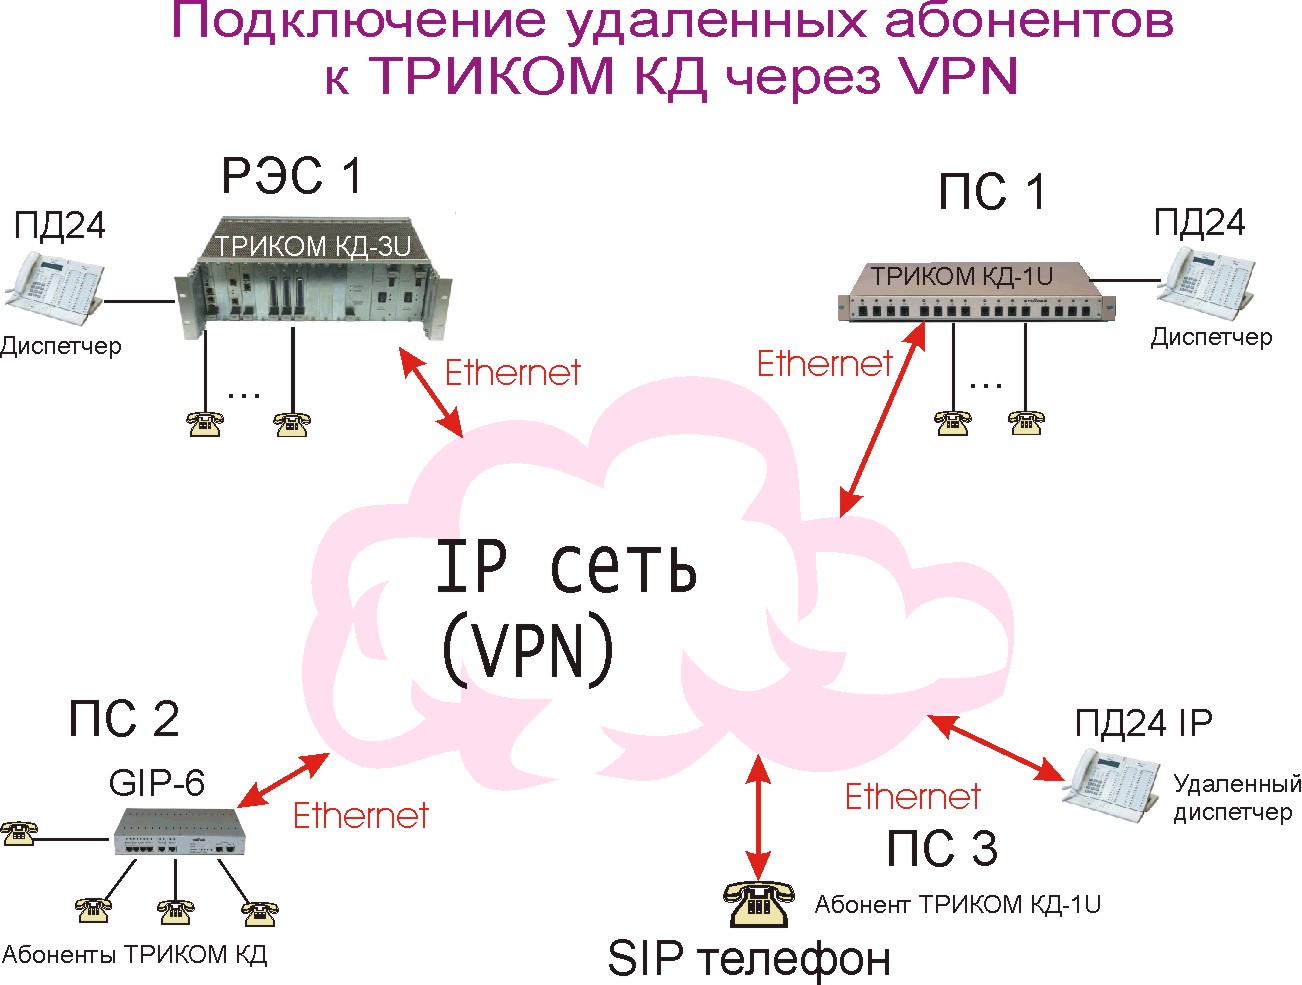 Ст пд. Триком пд24 IP. Пульт оперативной связи триком Пд-24 IP. Триком Пд-24 v.7 пульт диспетчера для УПАТС триком. Триком GIP-6.